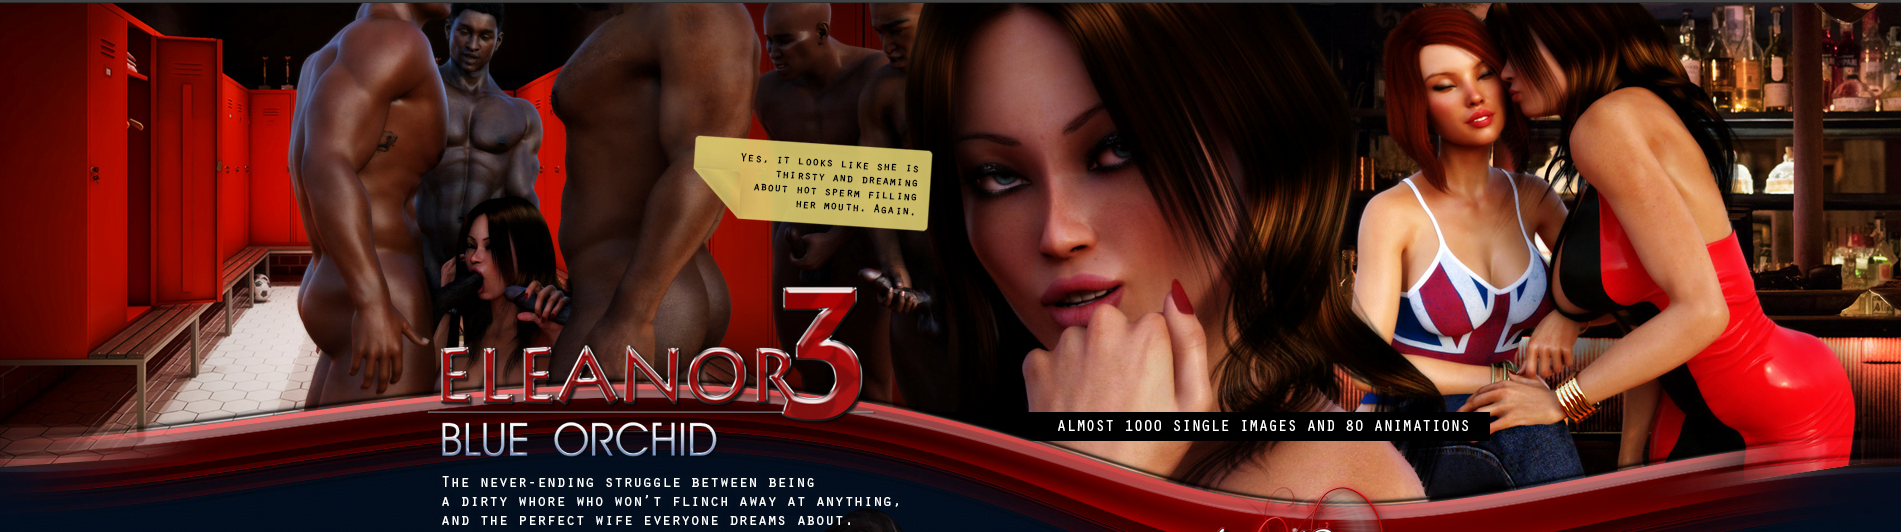 Eleanor 3: Blue Orchid – Version 1.0.2 - incest erotic game 12